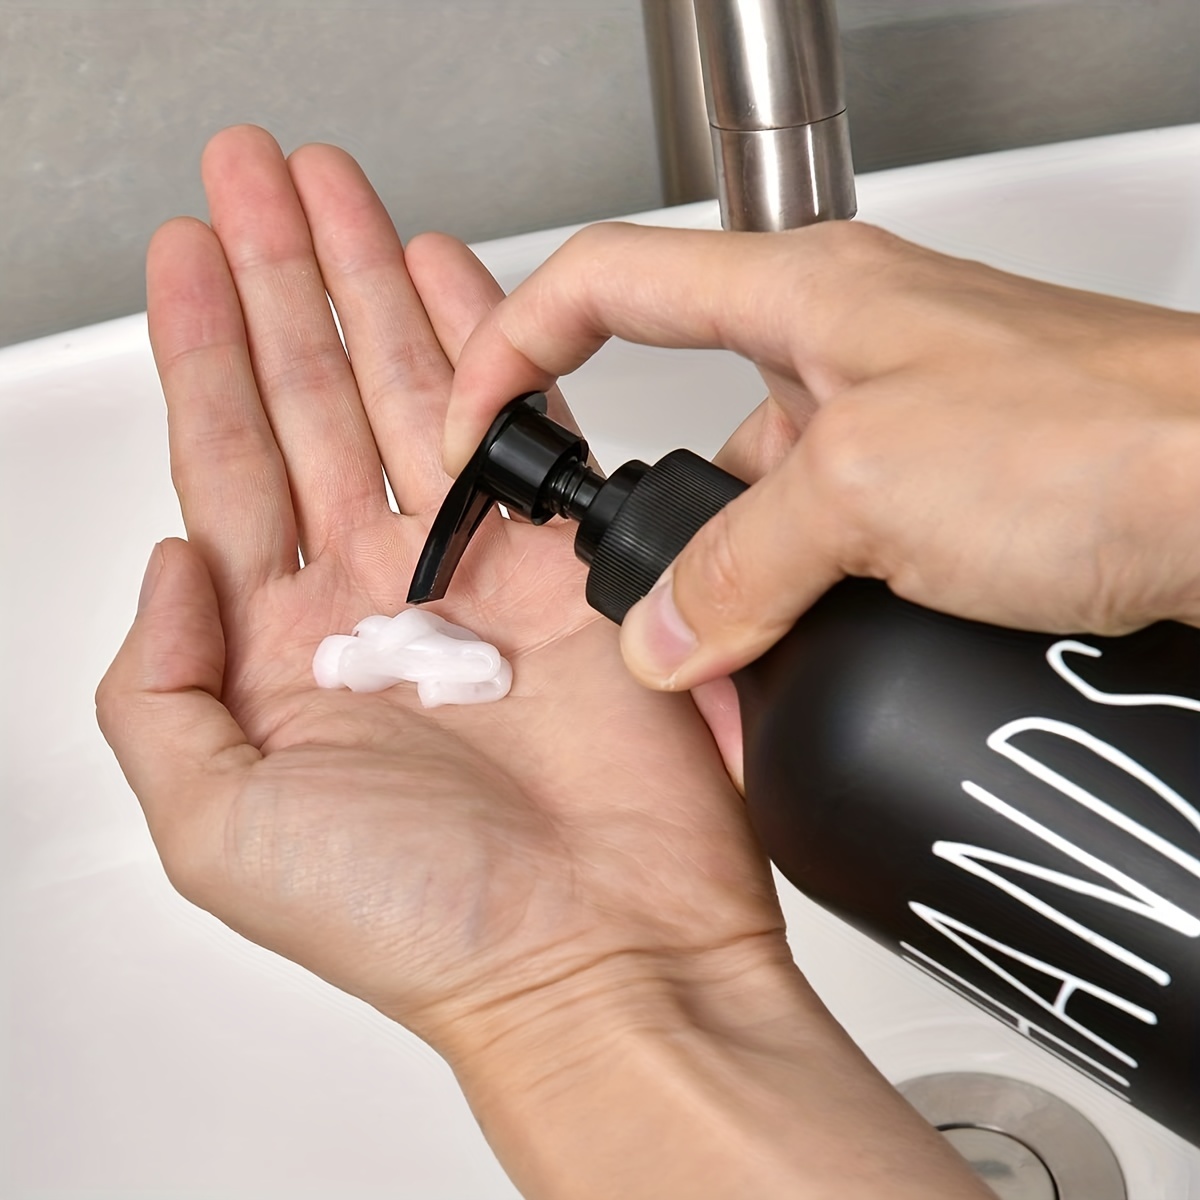 Hand & Dish Soap Dispenser Black Kitchen Accessories Kitchen Soap